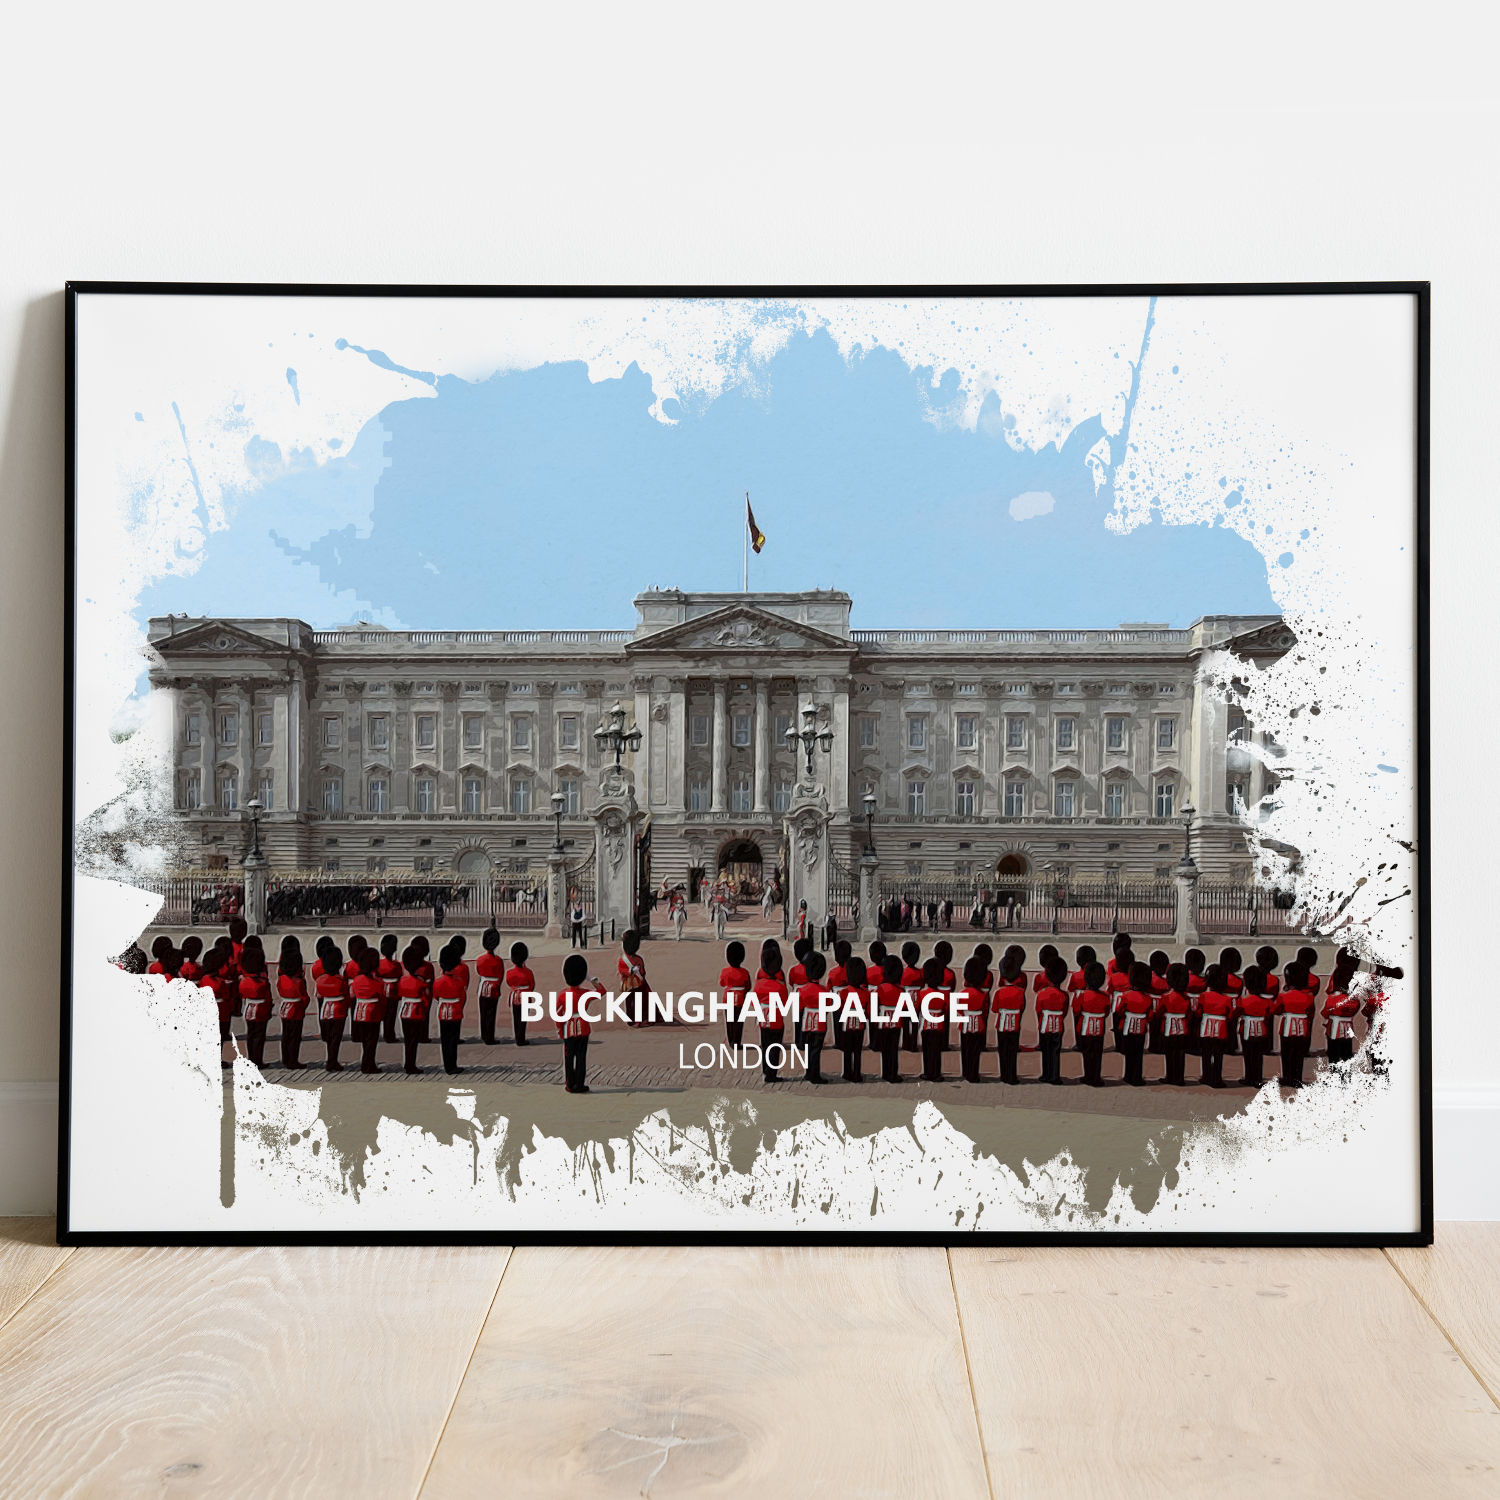 Buckingham Palace - London - Print - A4 - Standard - Print Only